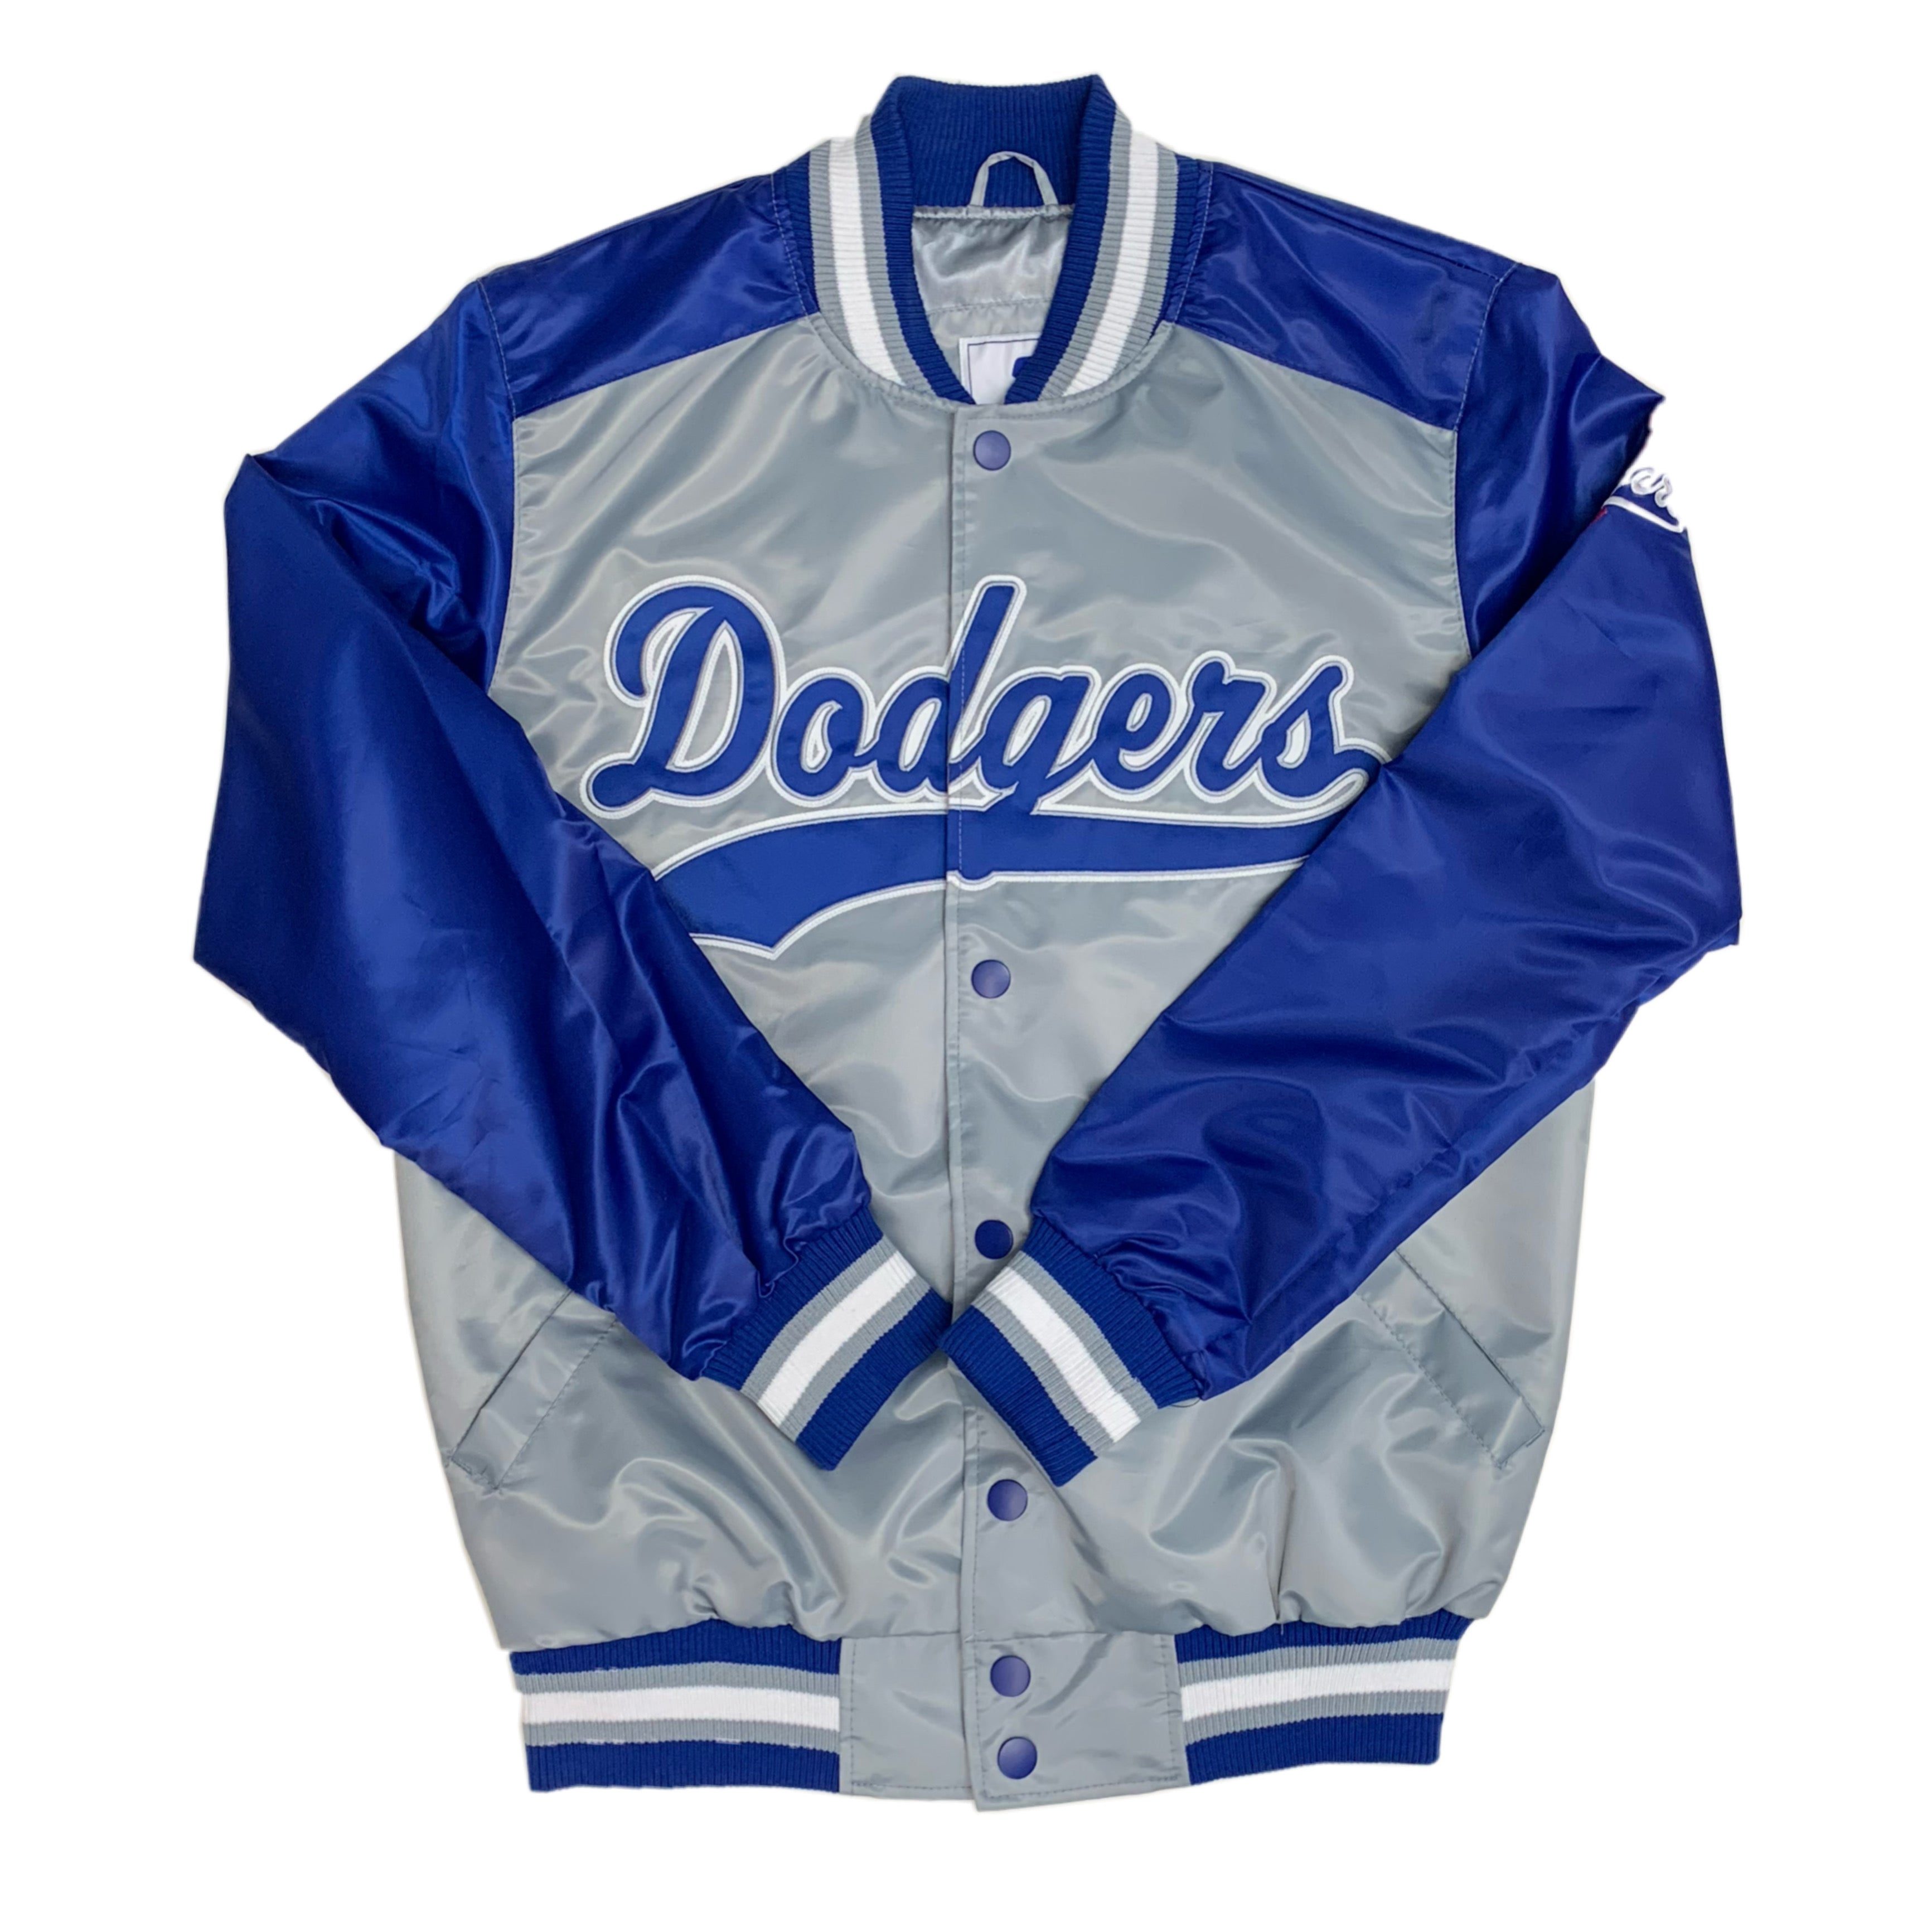 Los Angeles Dodgers Black Jacket - Starter Los Angeles Jacket